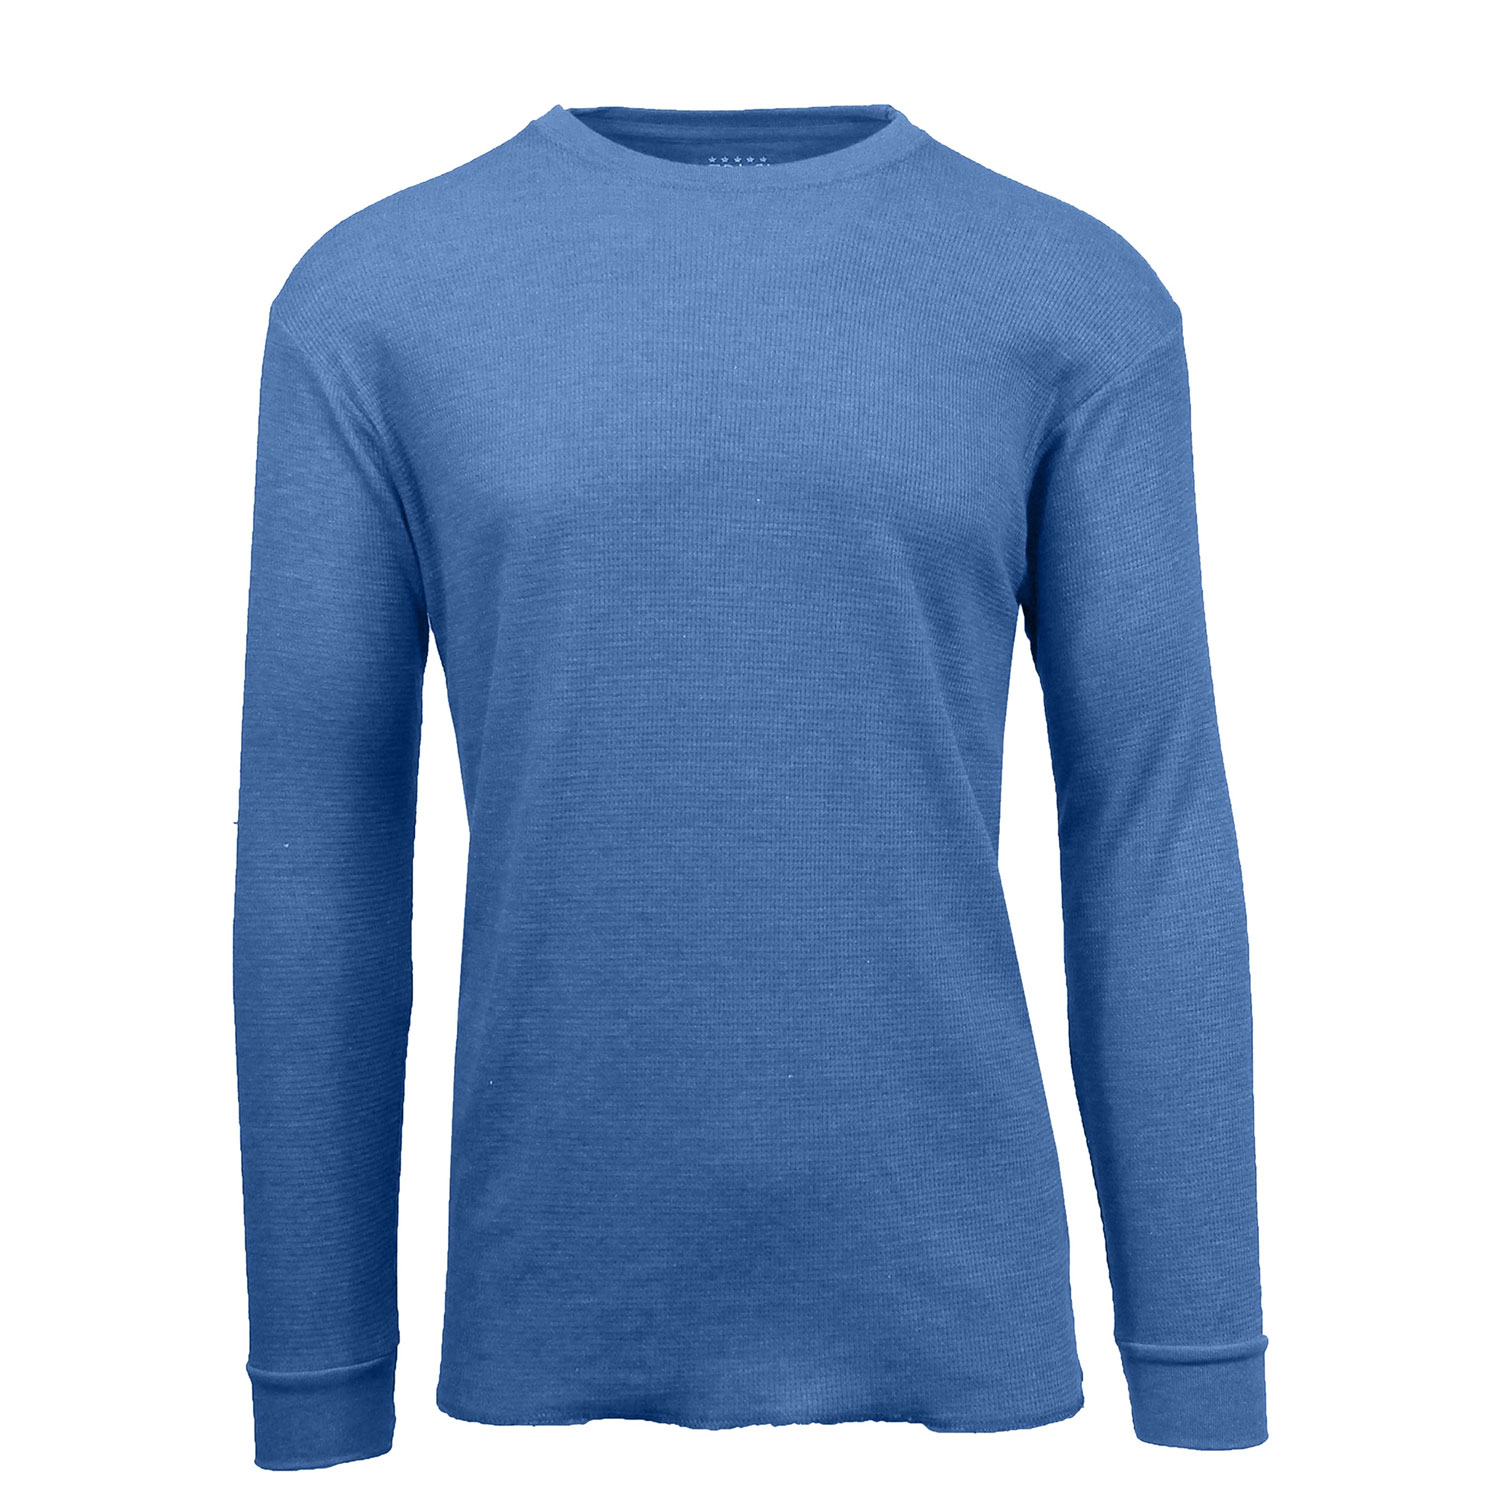 Men's Long Sleeve Waffle-Knit Basic Thermal Shirts